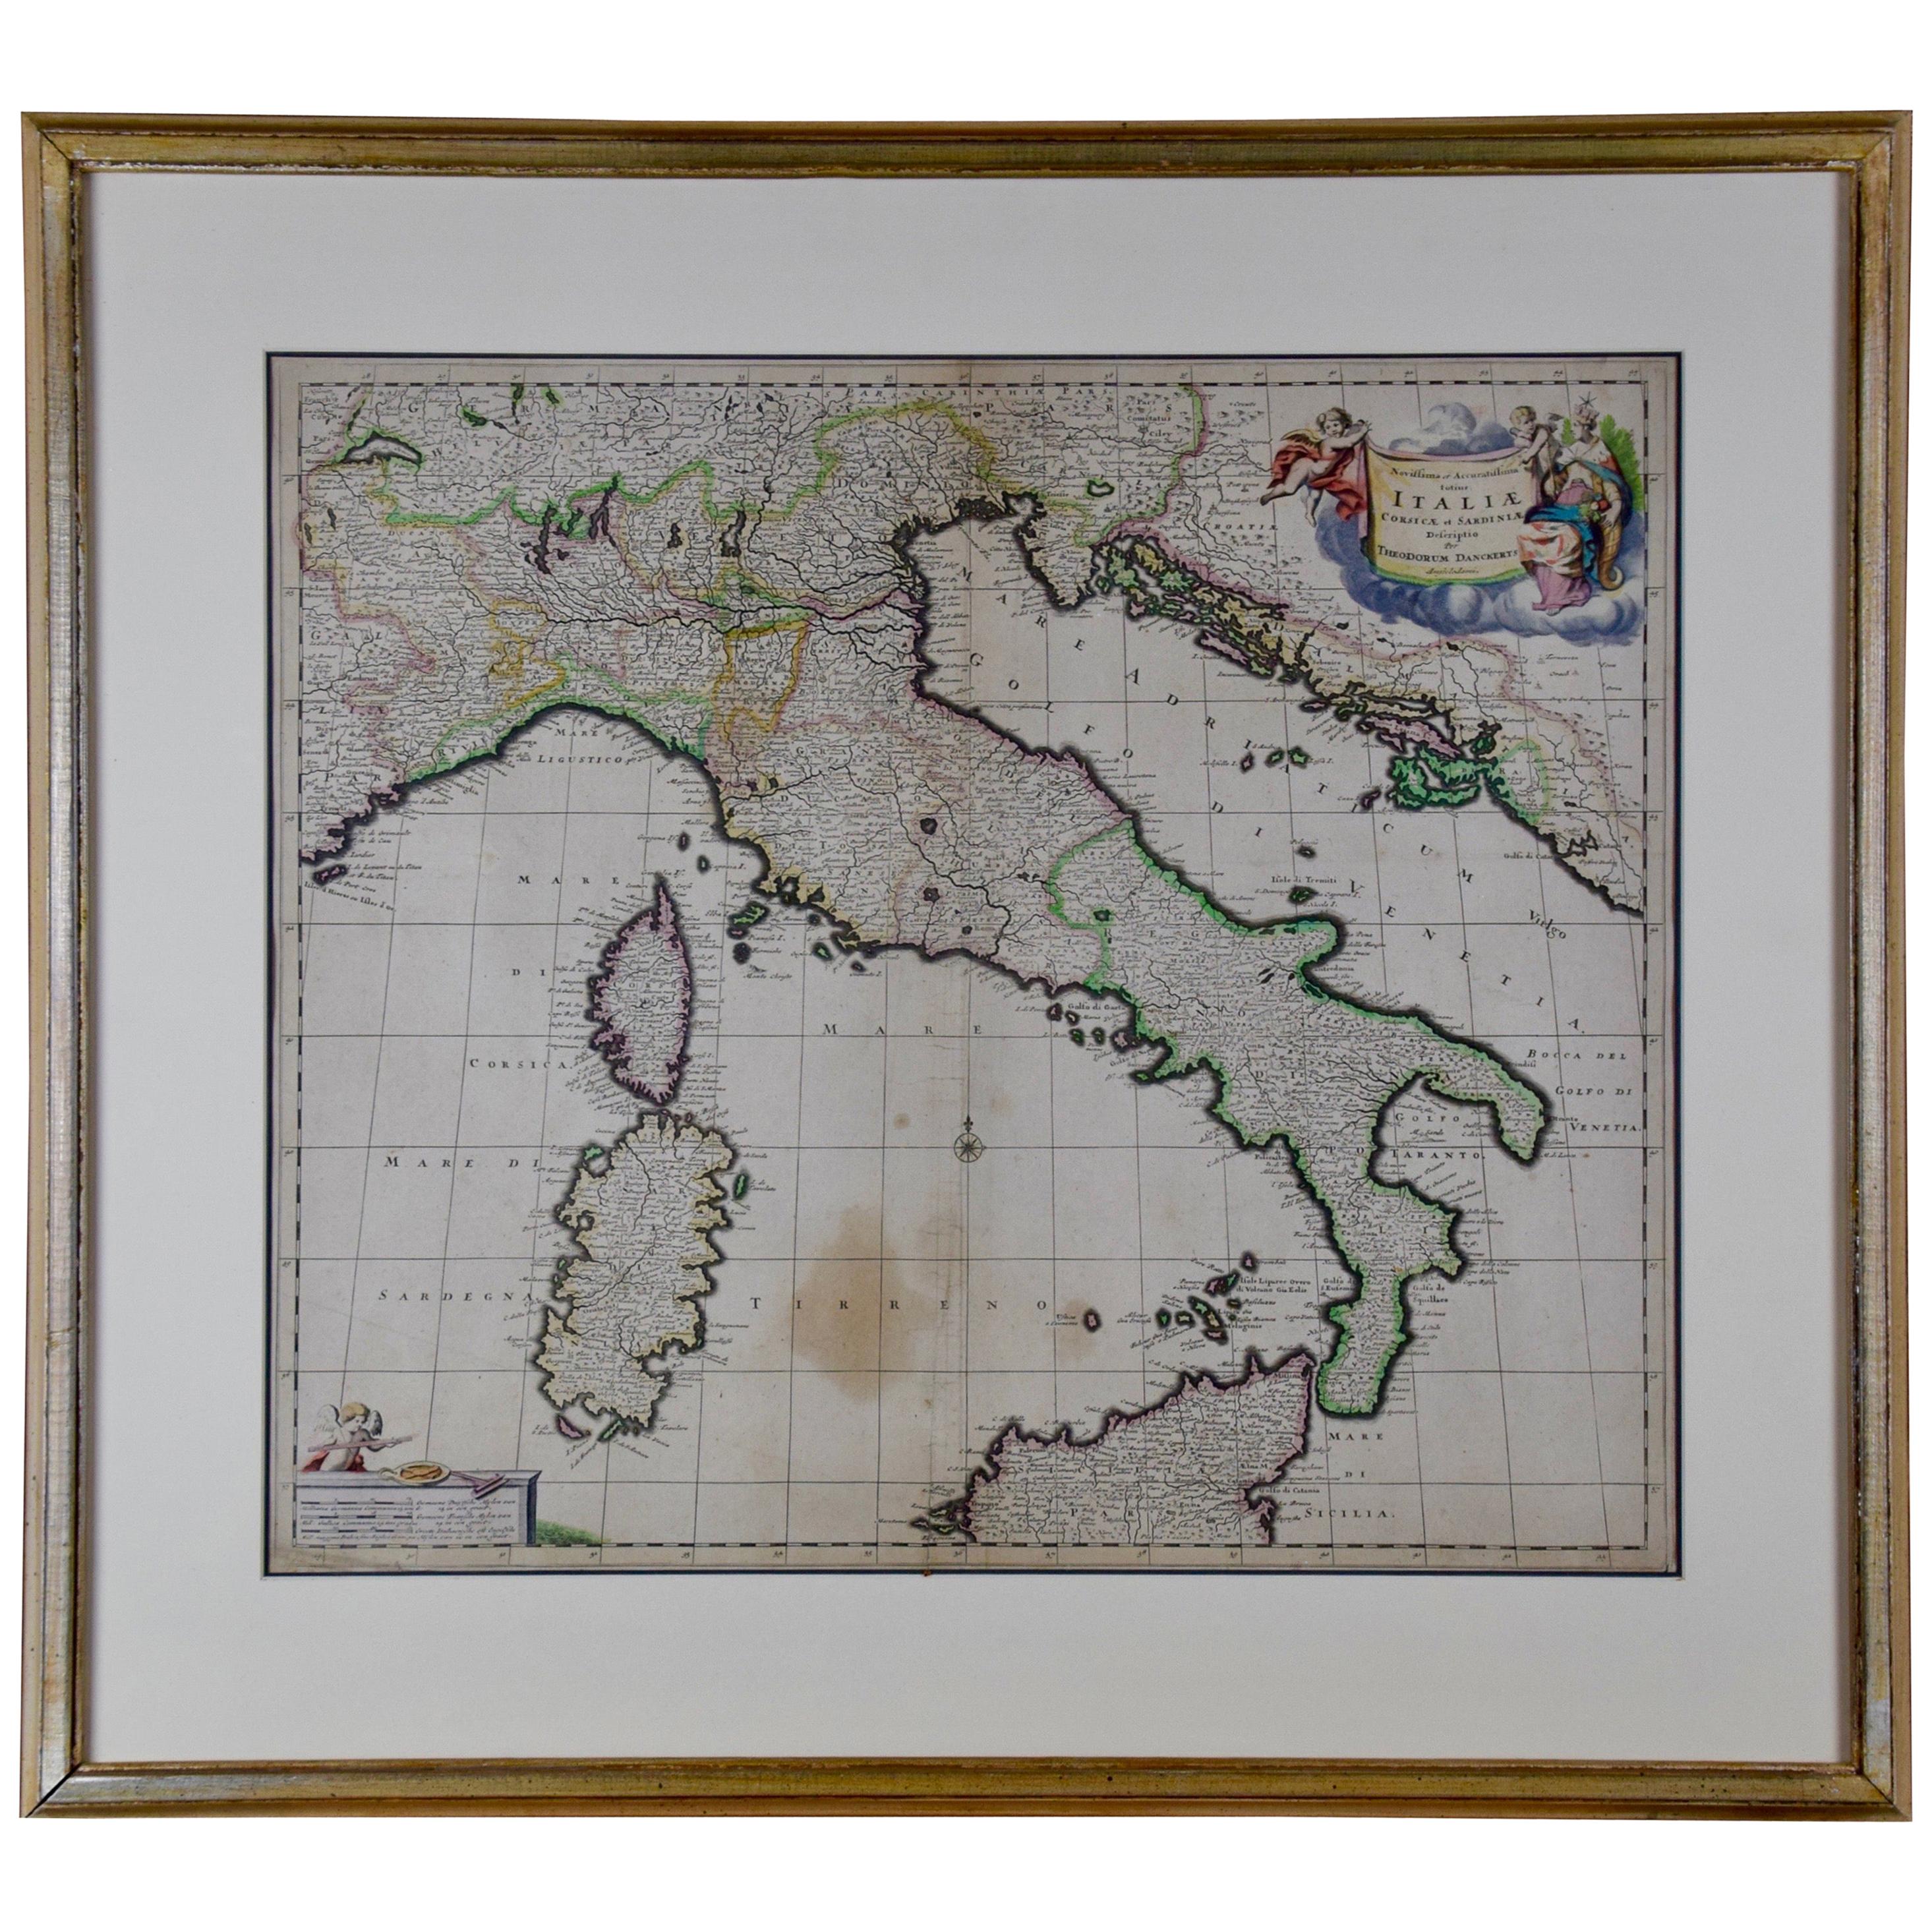 17th Century Dutch Map of Italy, Sicily, Sardinia, Corsica and Dalmatian Coast